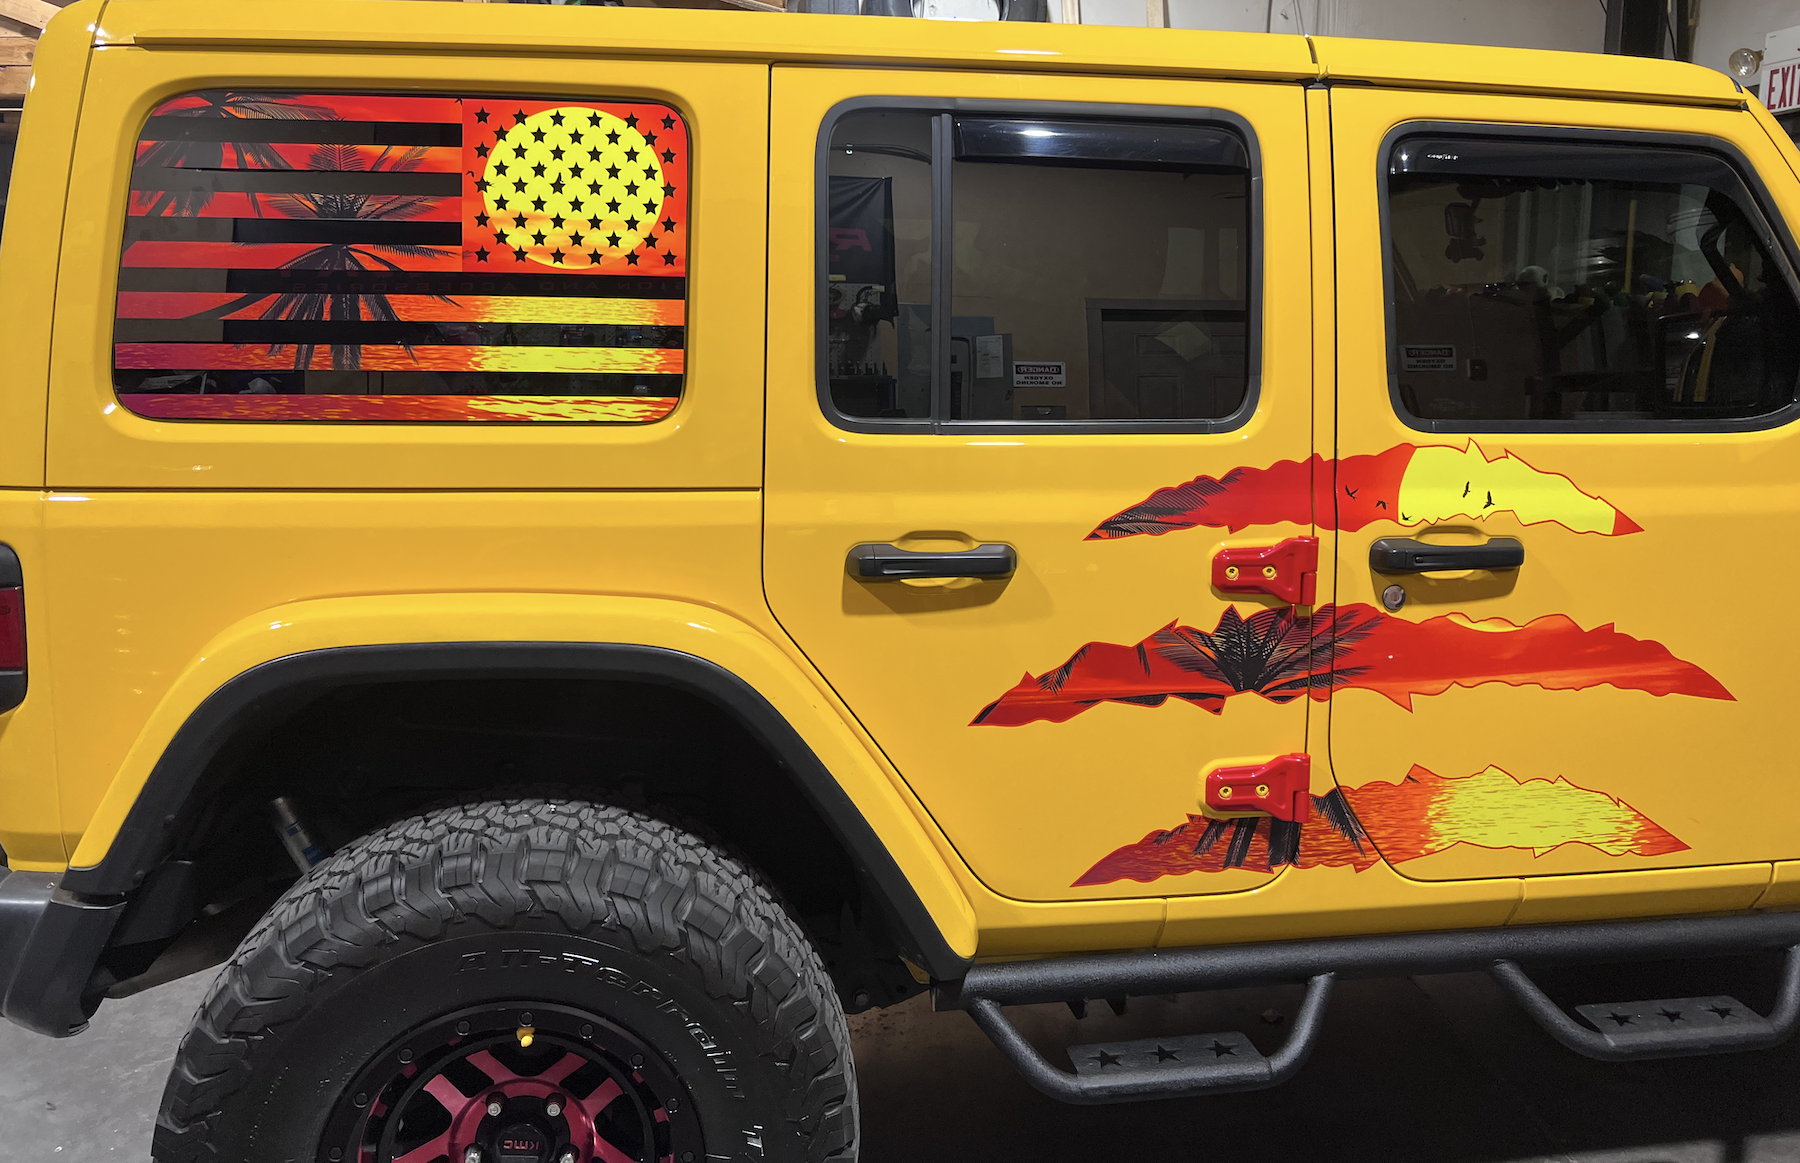 Jeep graphics